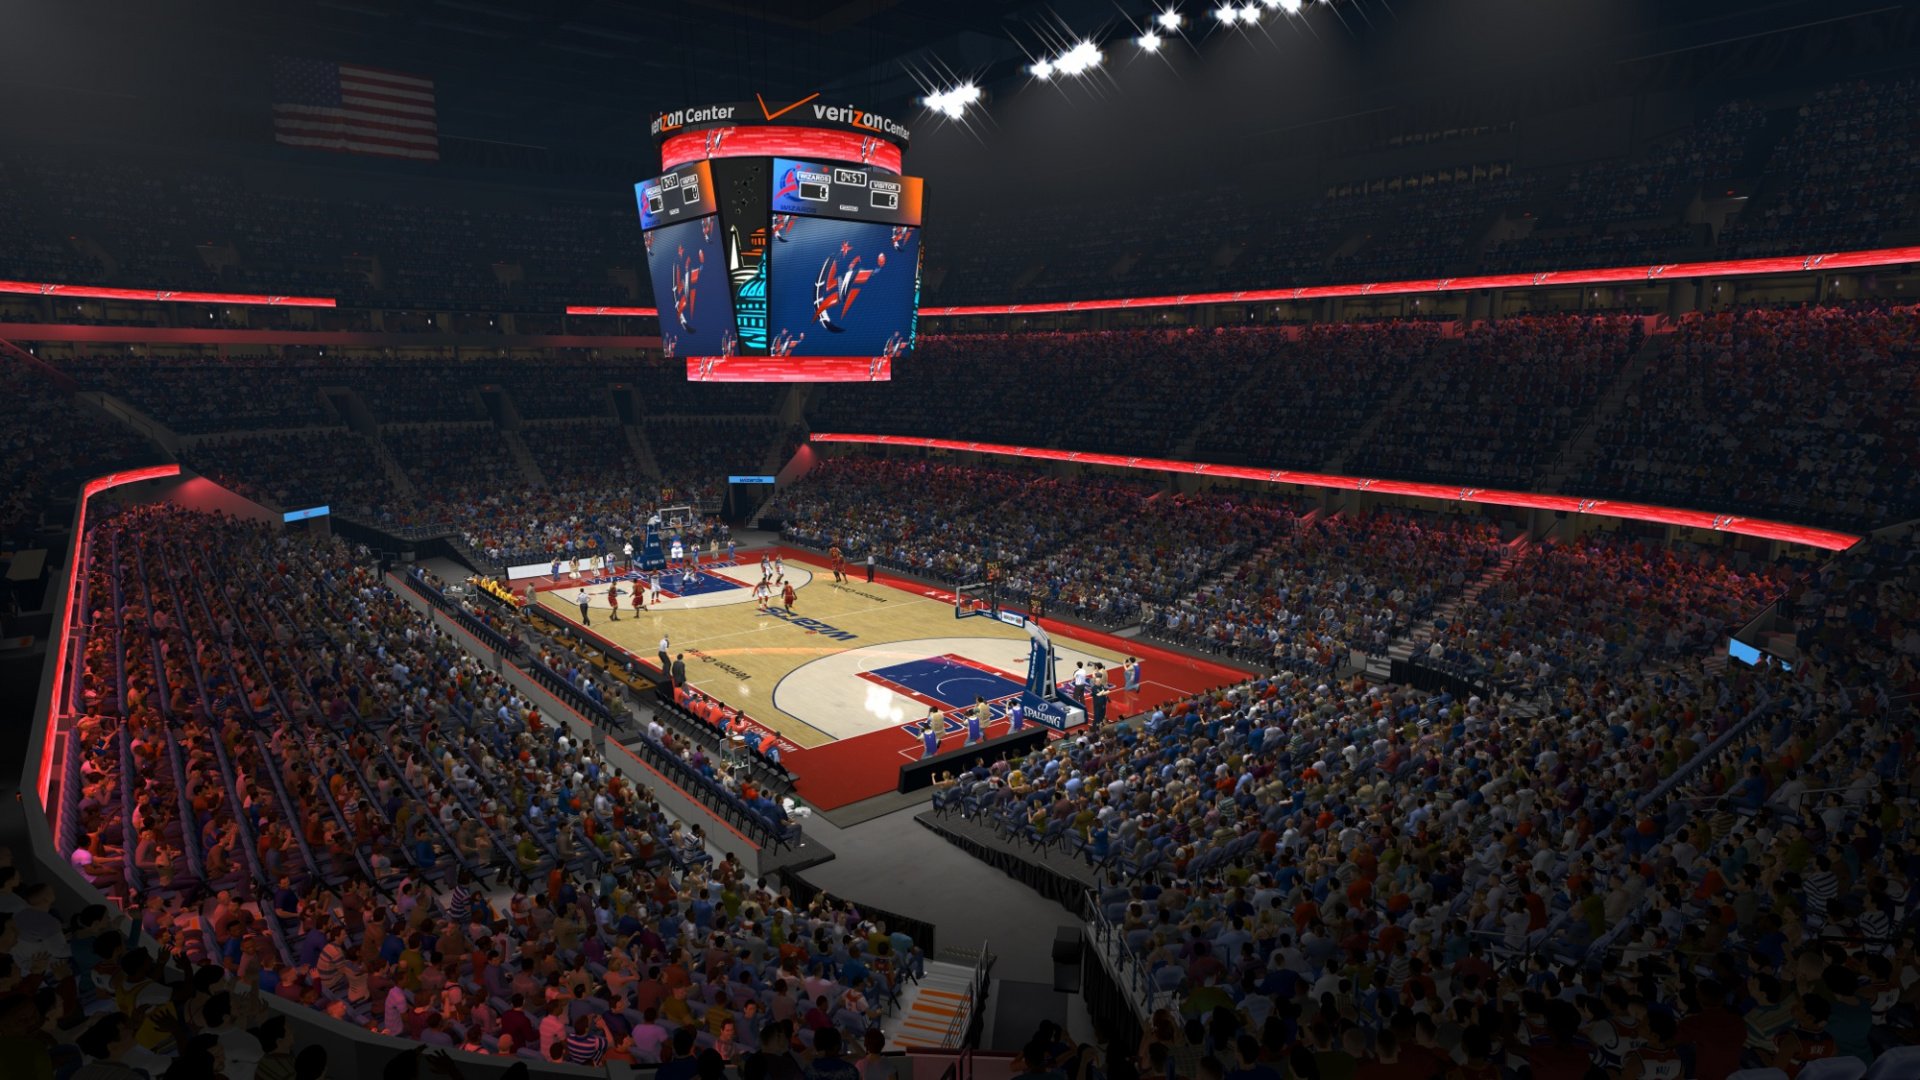 NBA Live 14 (PS4 / PlayStation 4) Game Profile | News, Reviews, Videos